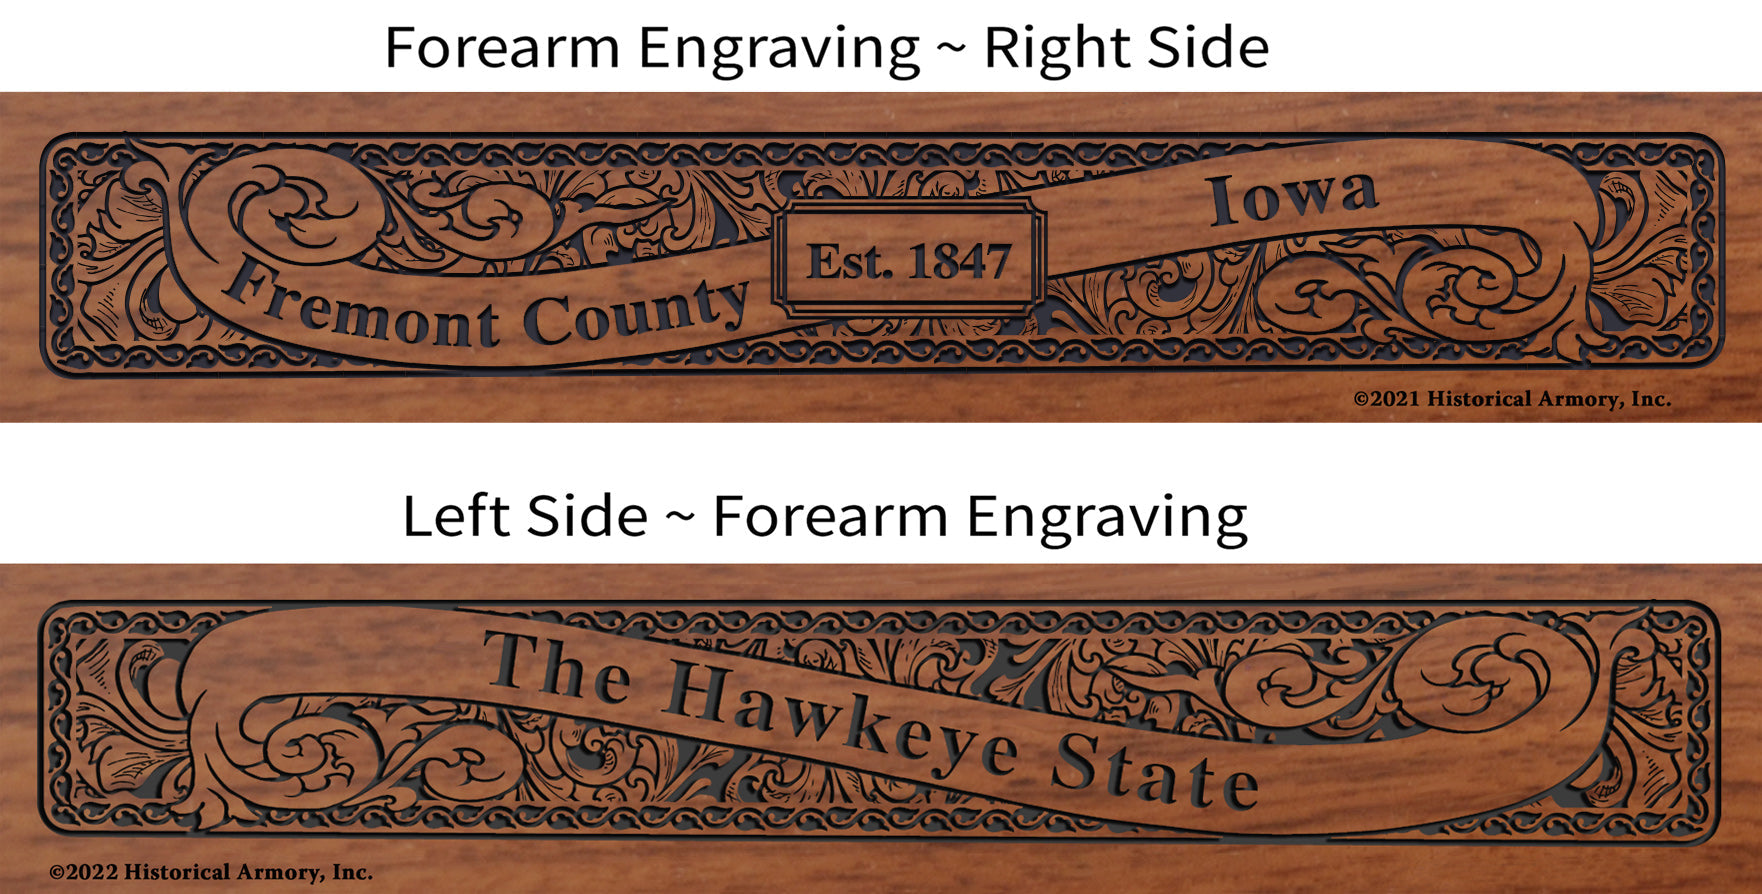 Fremont County Iowa Engraved Rifle Forearm